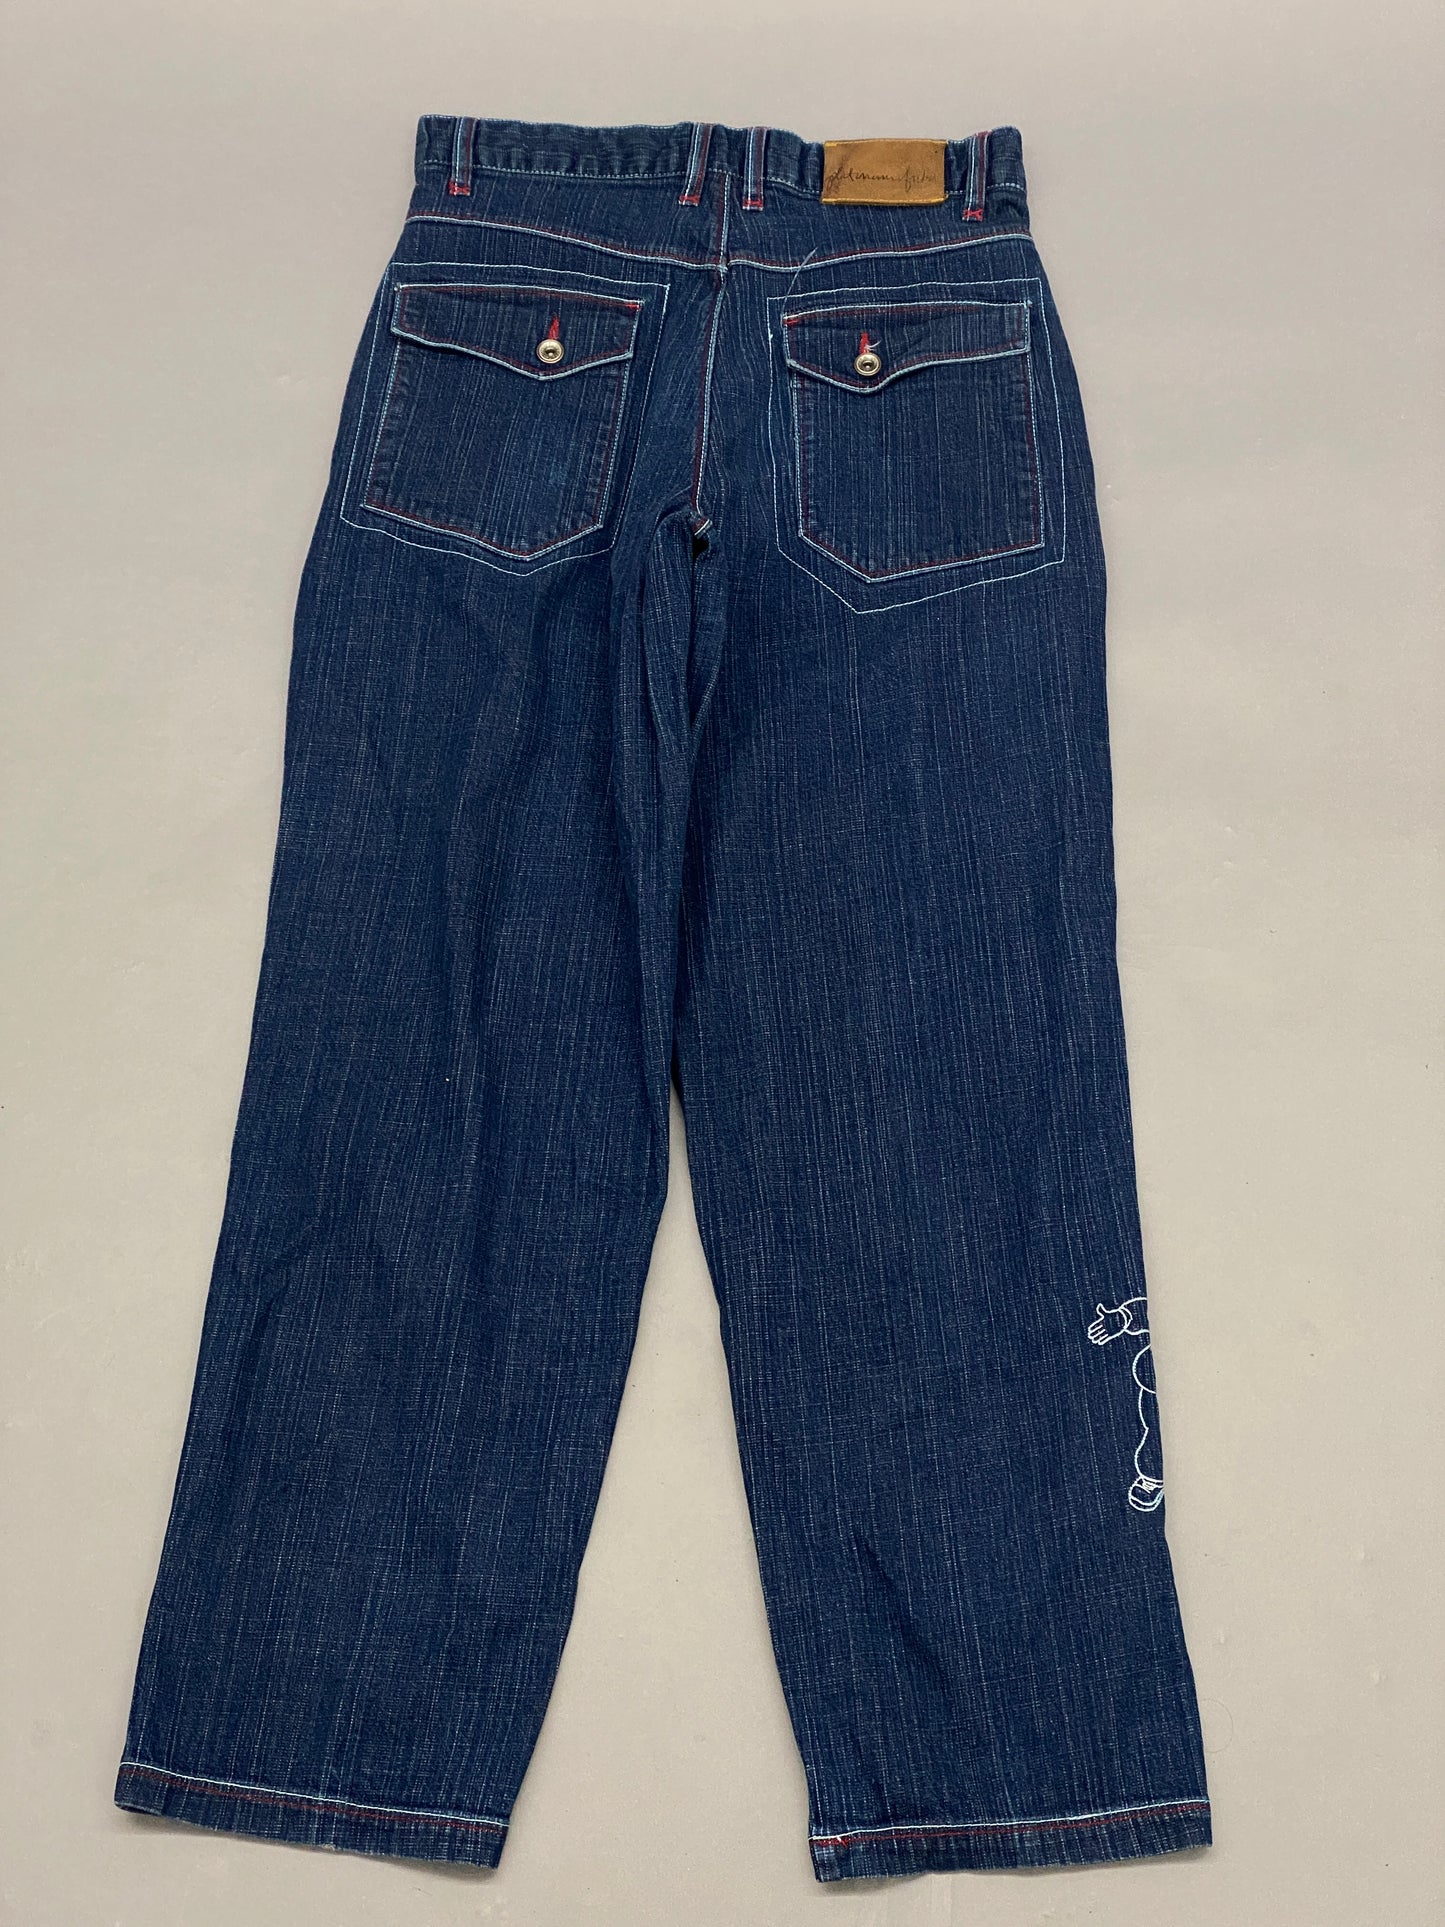 Fubu Platinum Fat Albert Vintage Jeans - 34